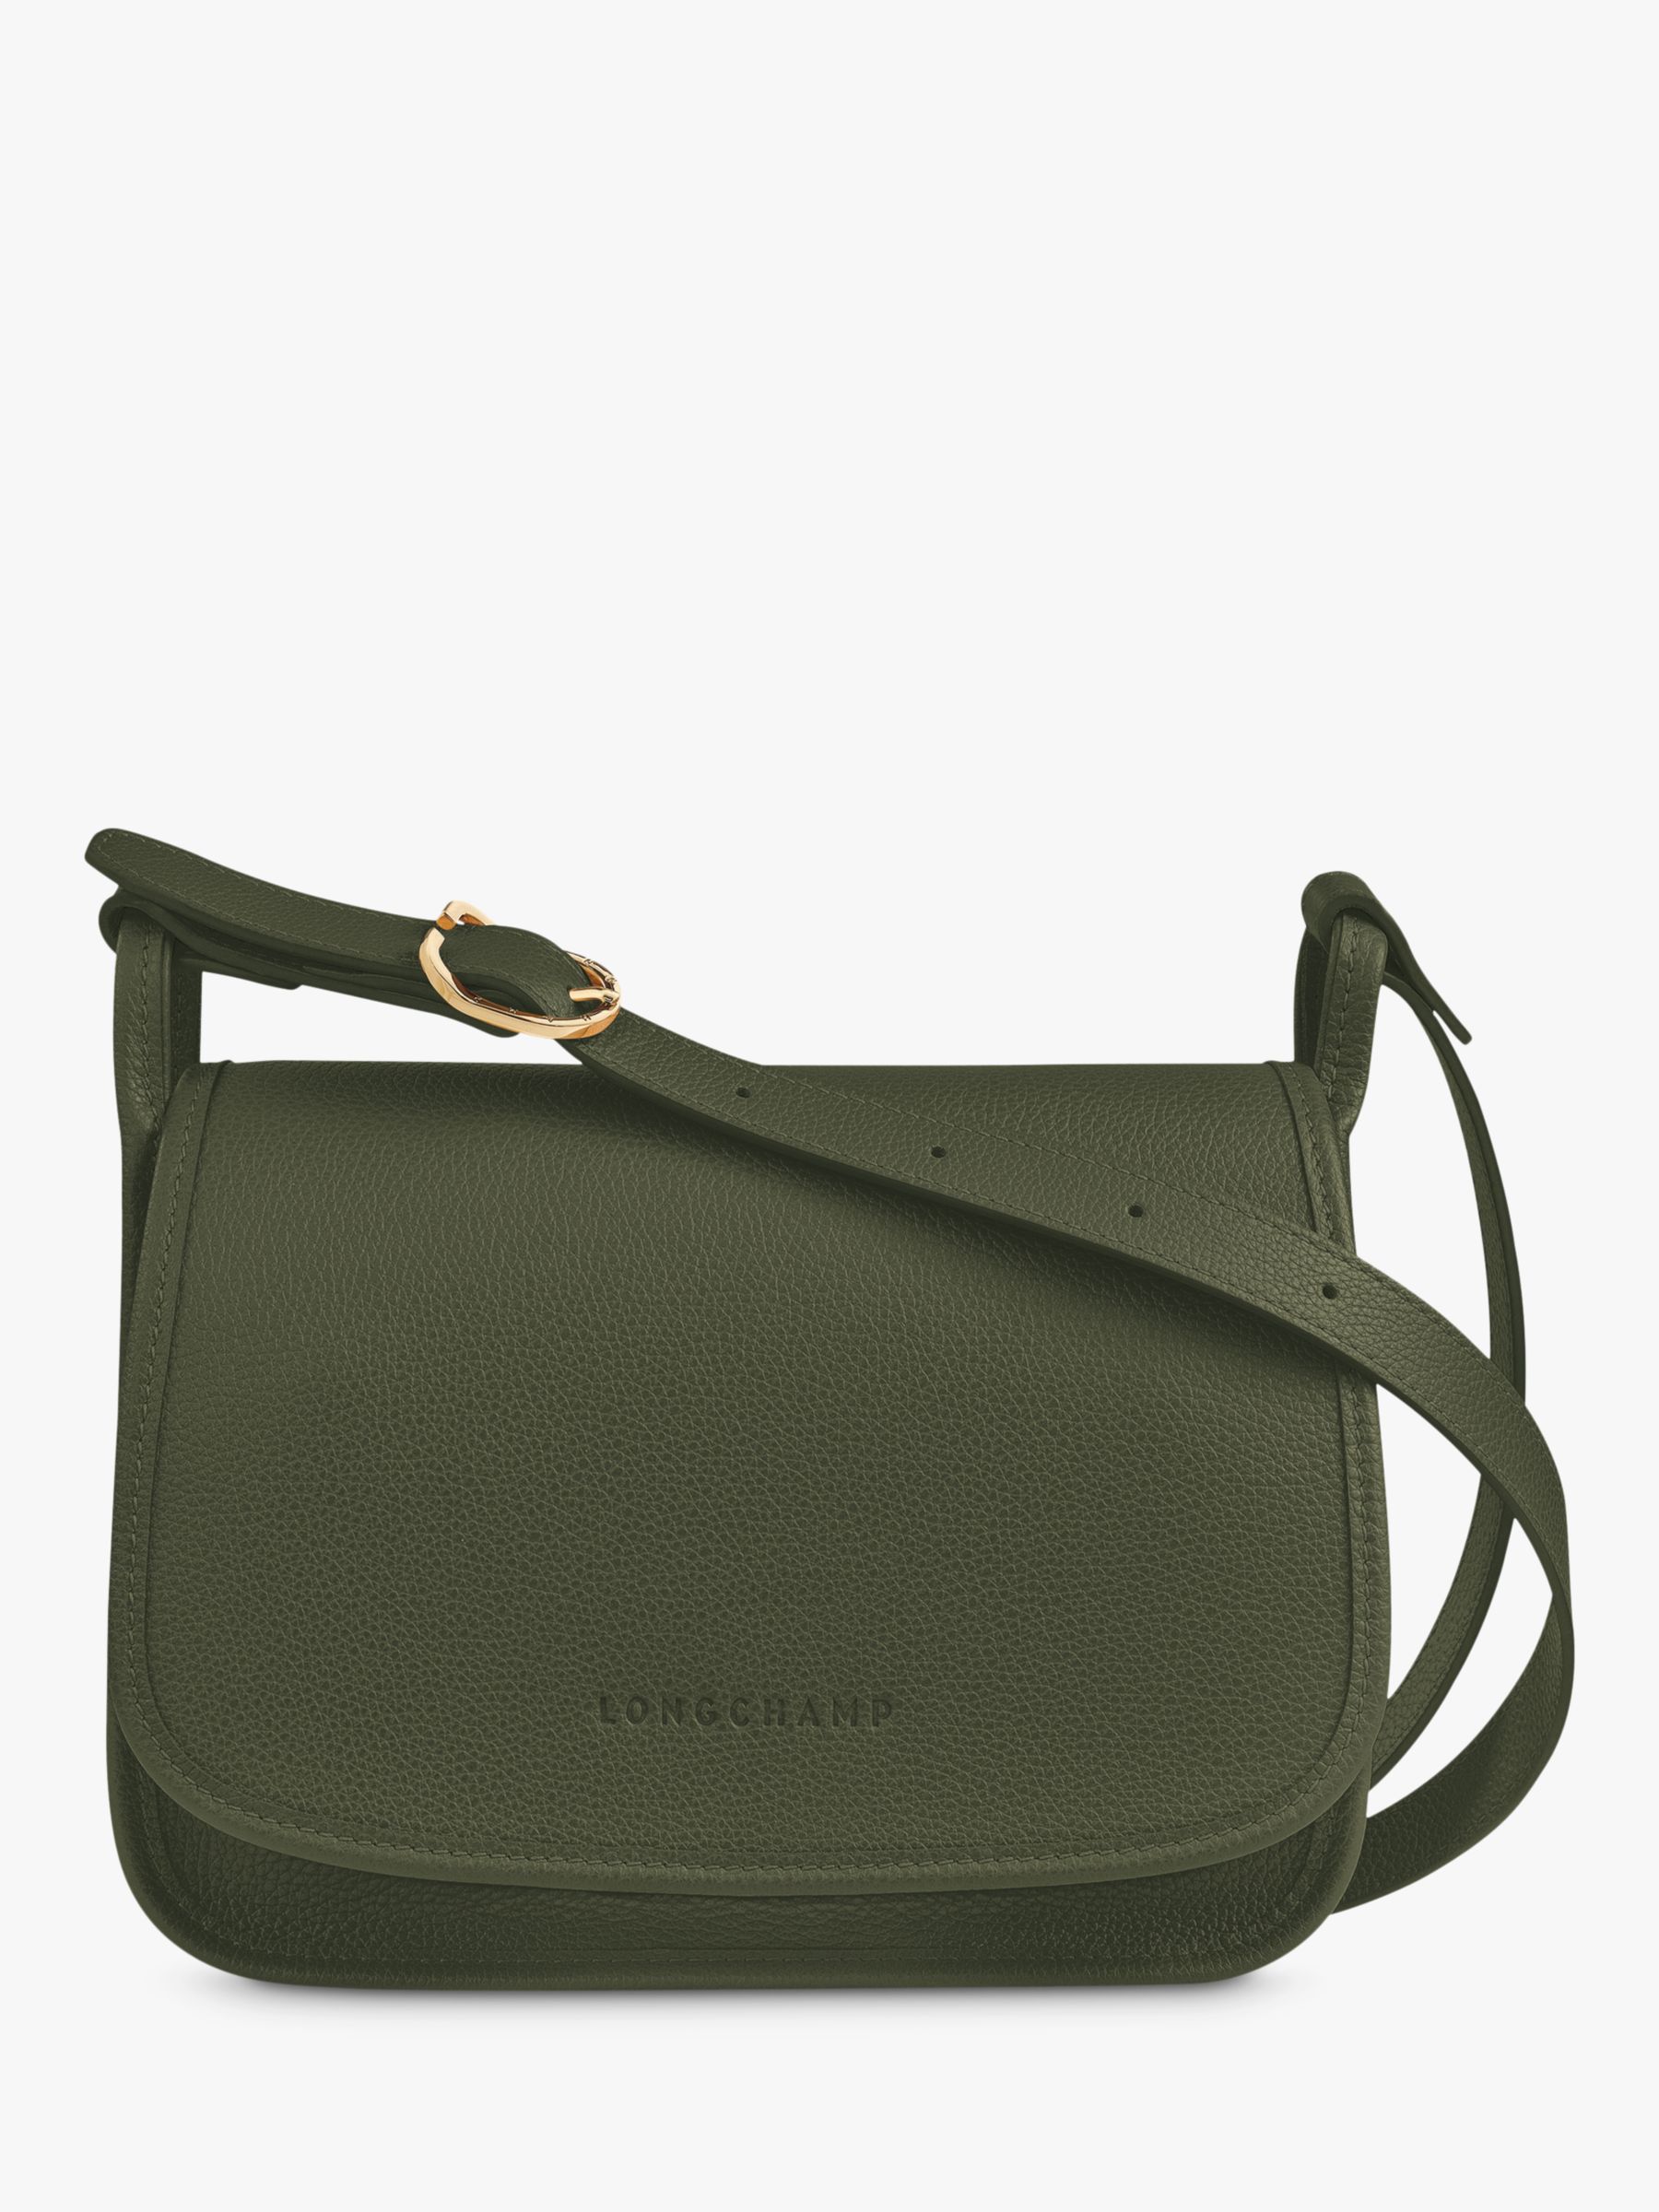 Longchamp Le FoulonnÃƒÂ© Medium Leather Flap Over Cross Body Bag